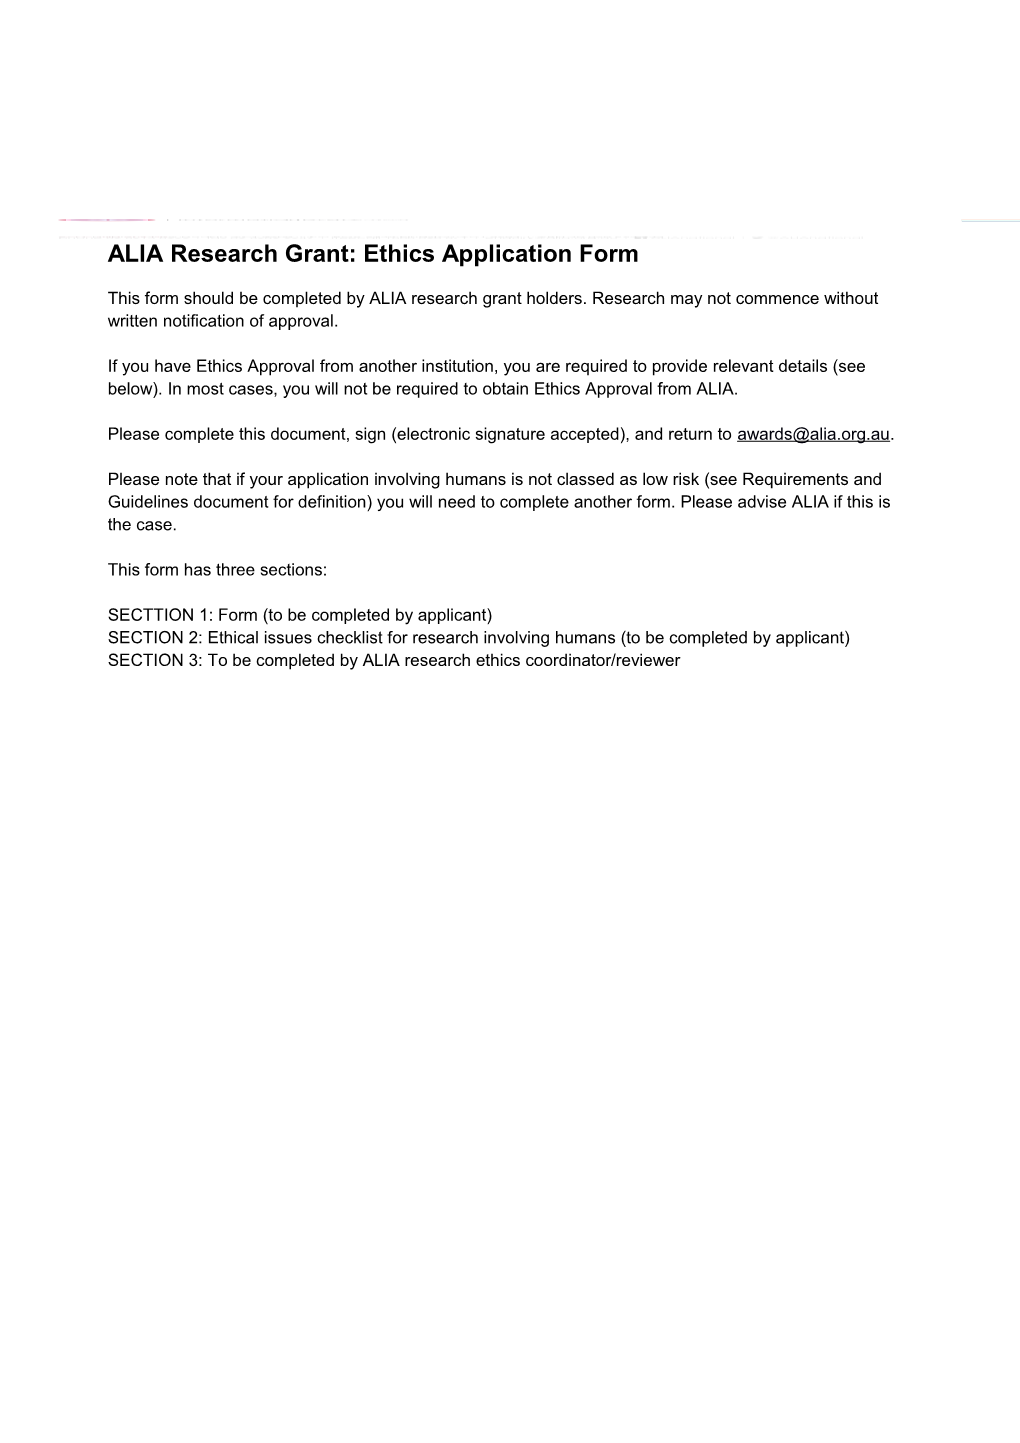 ALIA Research Grant: Ethics Application Form